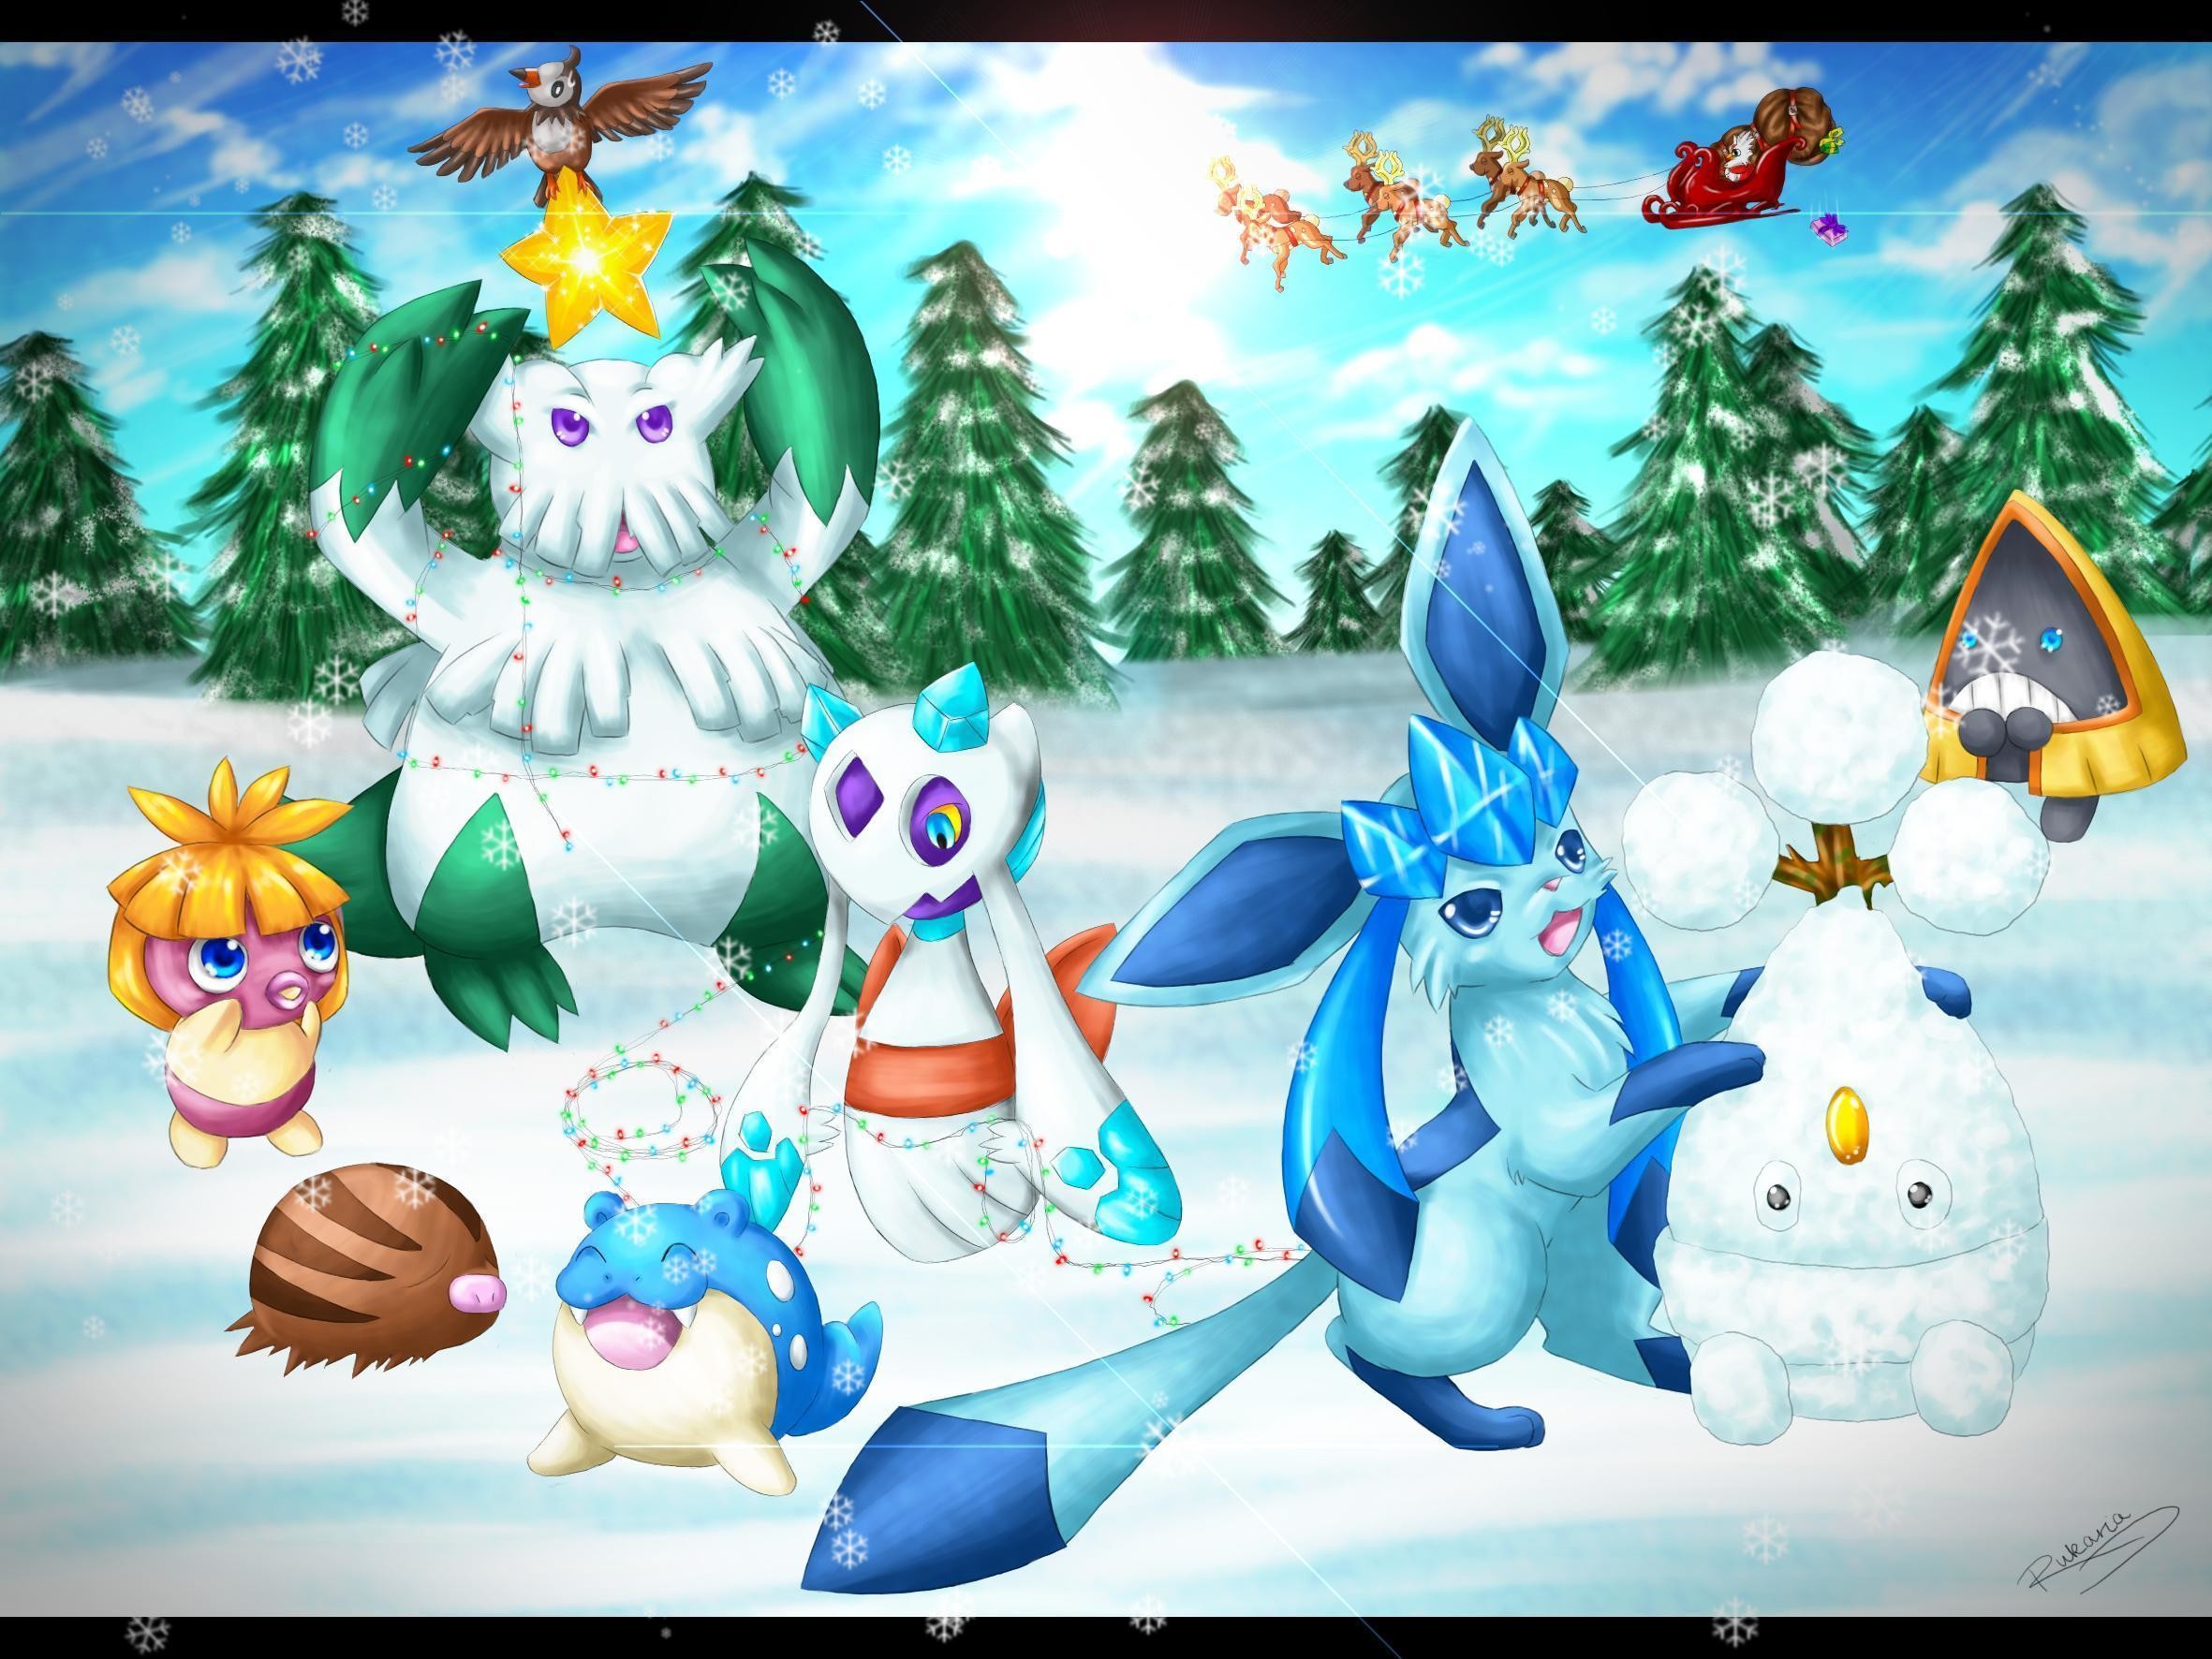 Filename: CUnpe3p.jpg Â· view image. Found on: pokemon-christmas-wallpaper